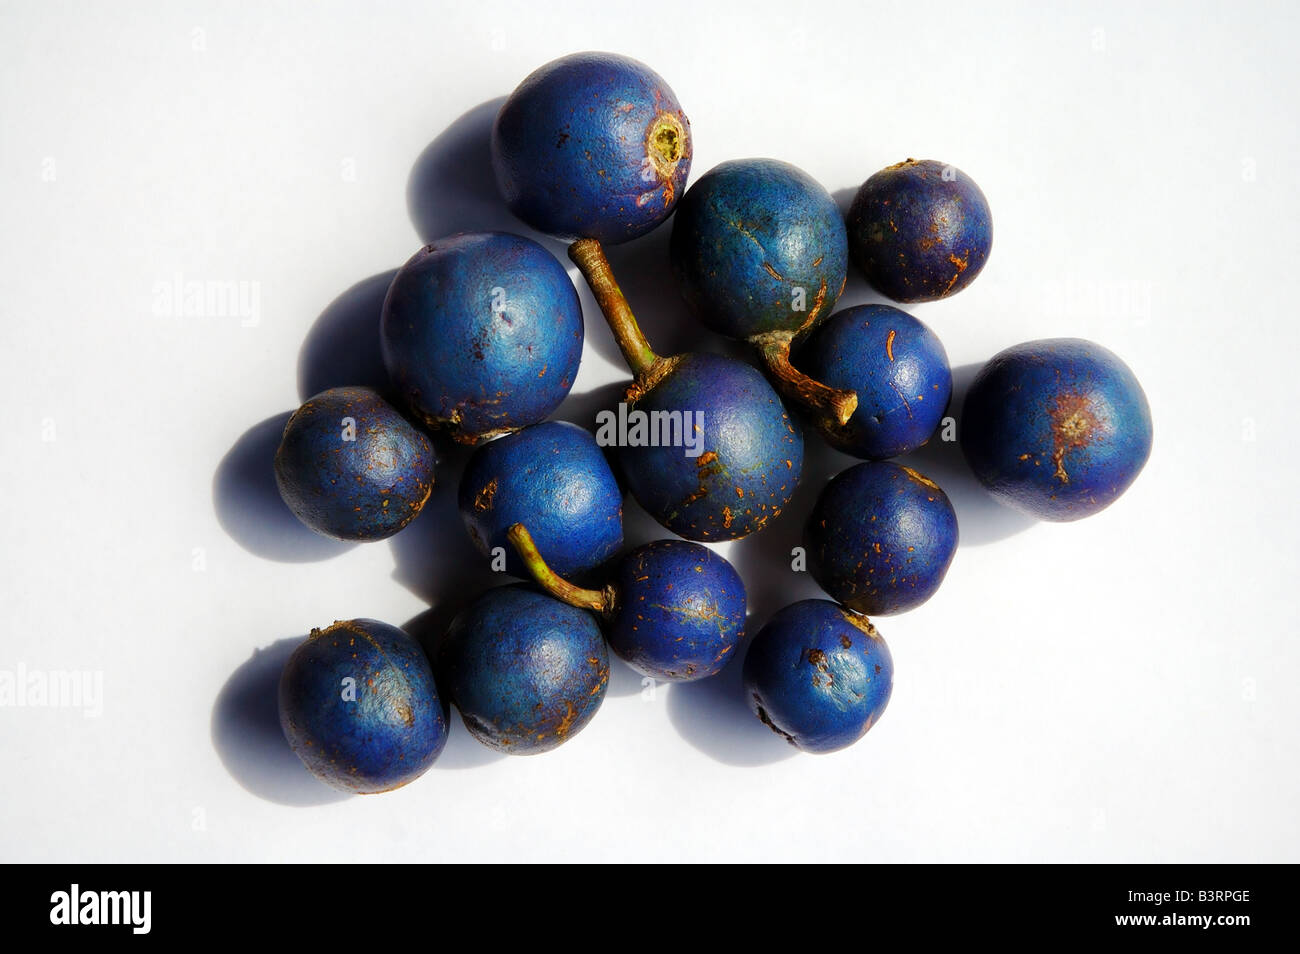 Blue quandong (Elaeocarpus grandis) fruits, from tropical rainforests of northern Queensland, Australia Stock Photo